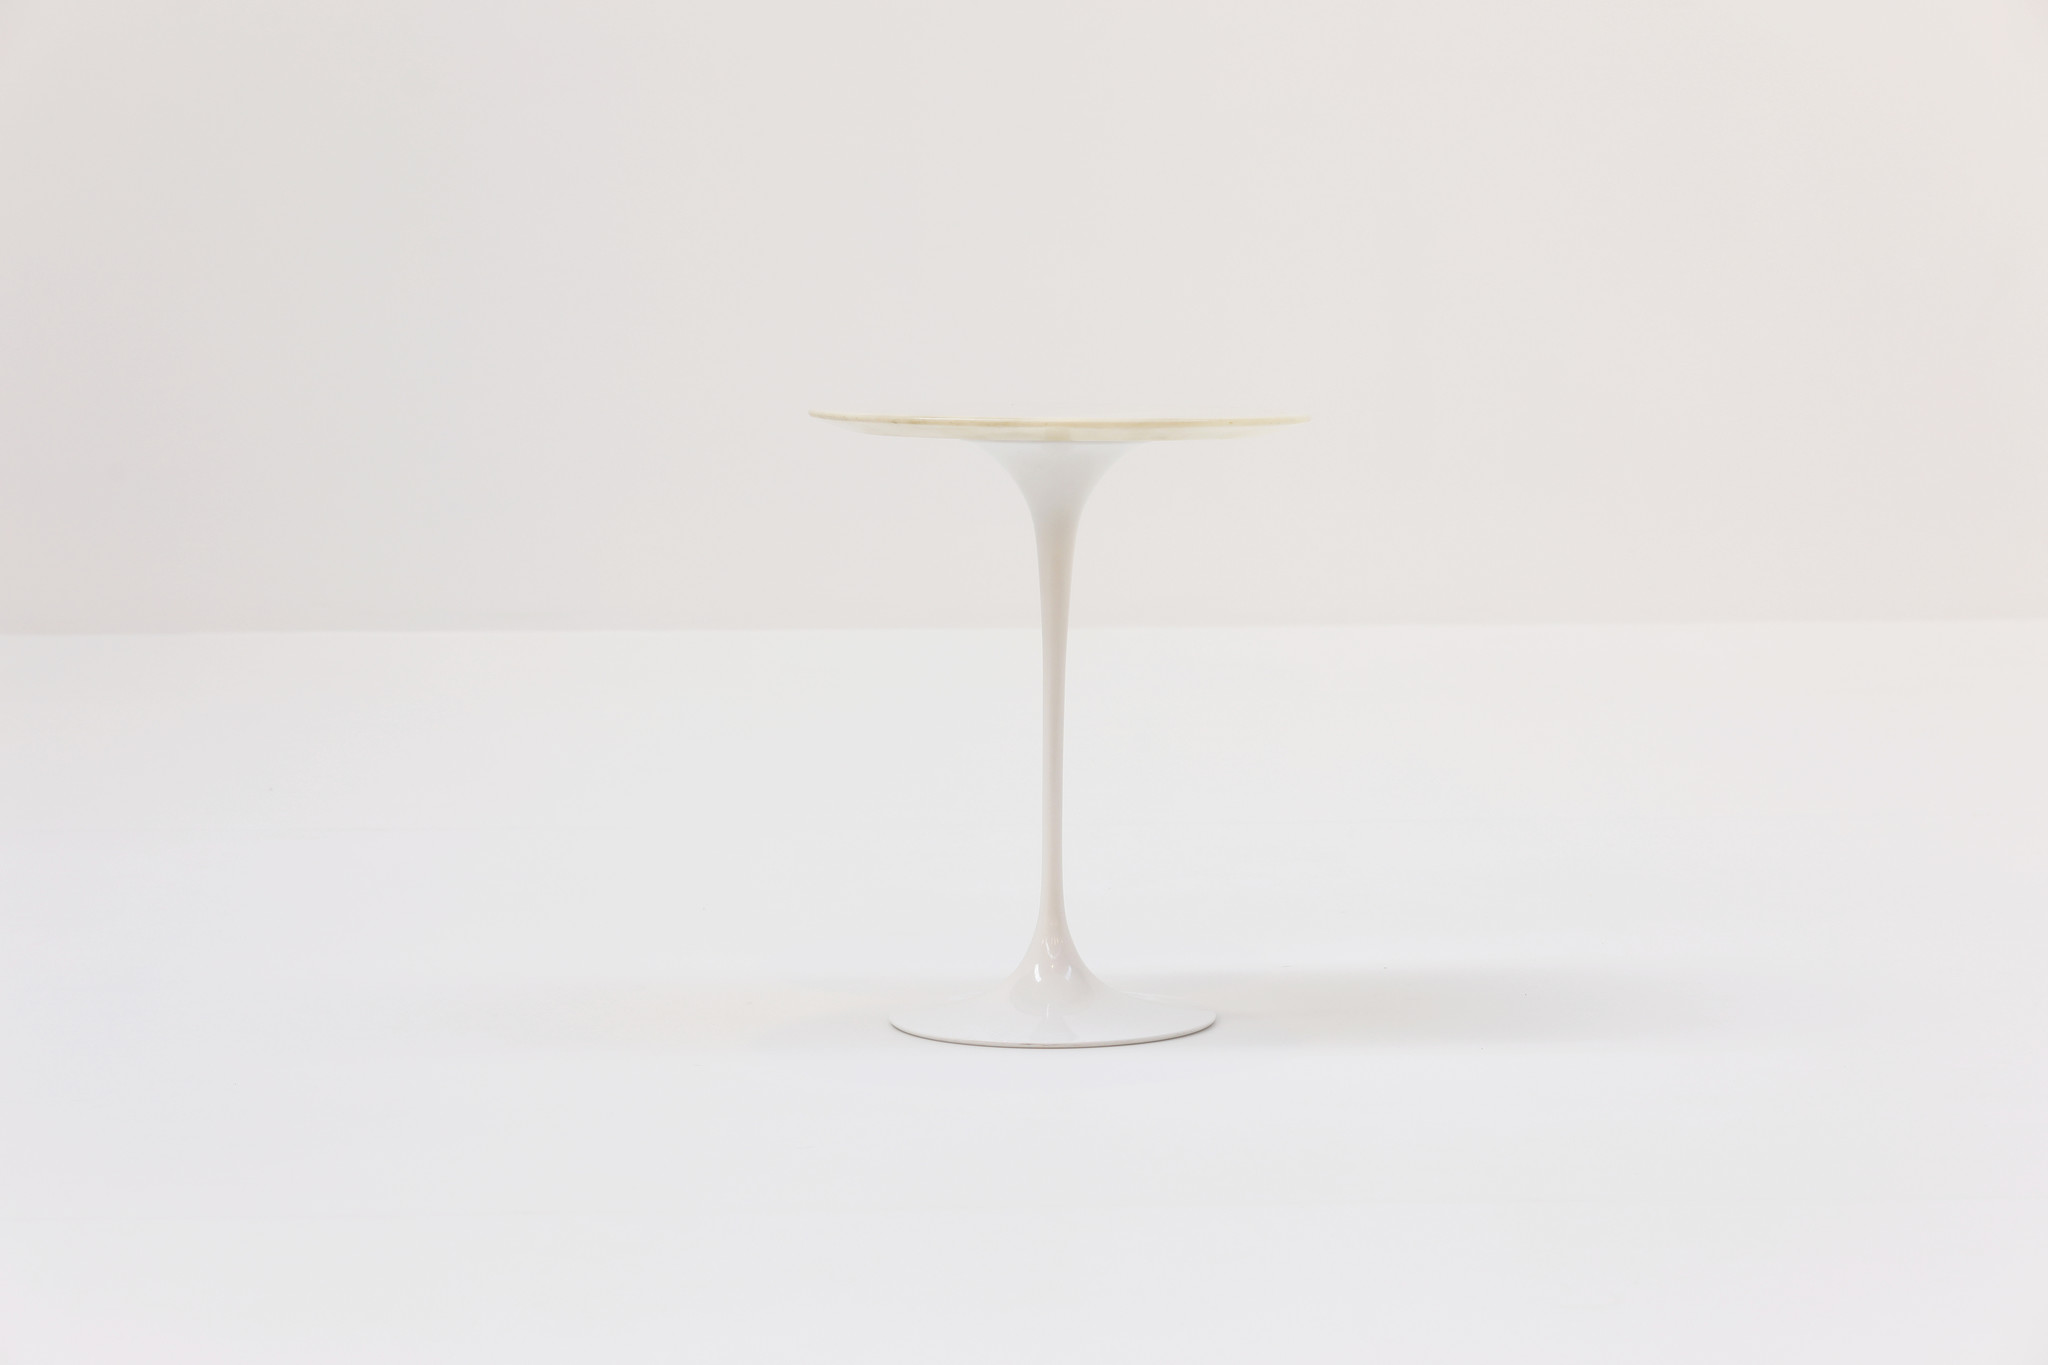 KNOLL SIDE TABLE DESIGNED BY EERO SAARINEN, 1950'S